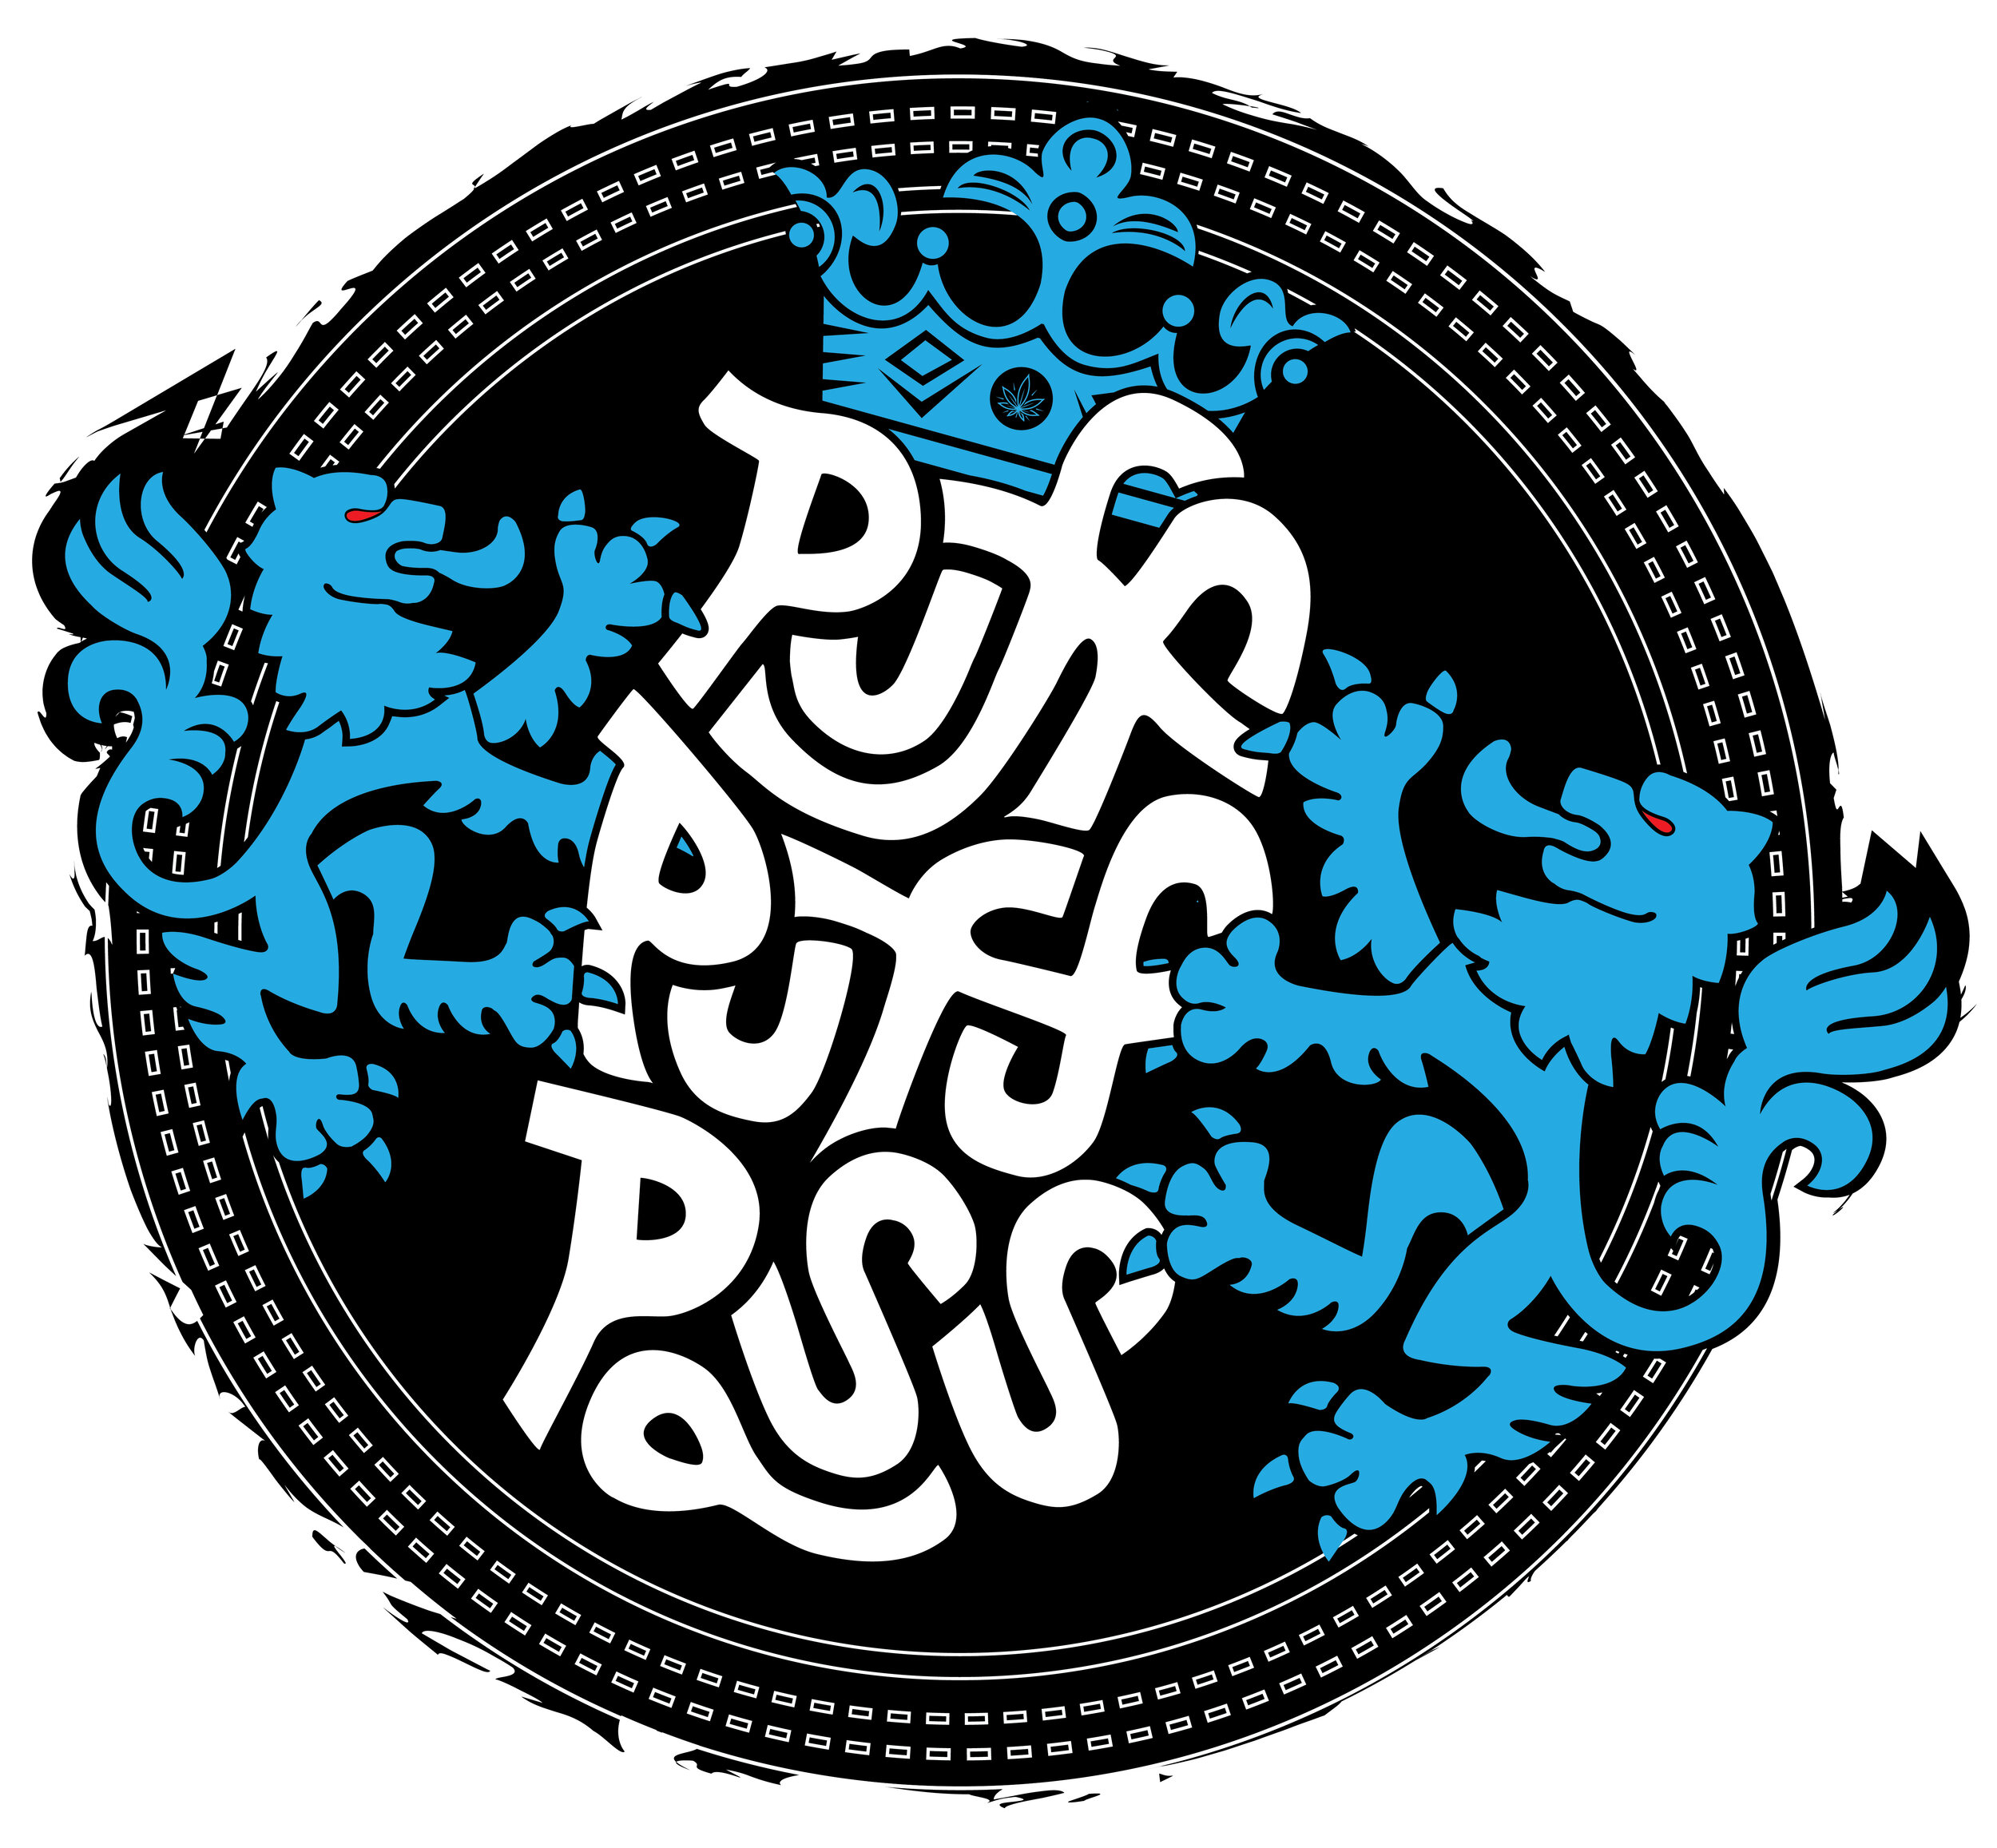 PPP.dj.logo-01.jpg